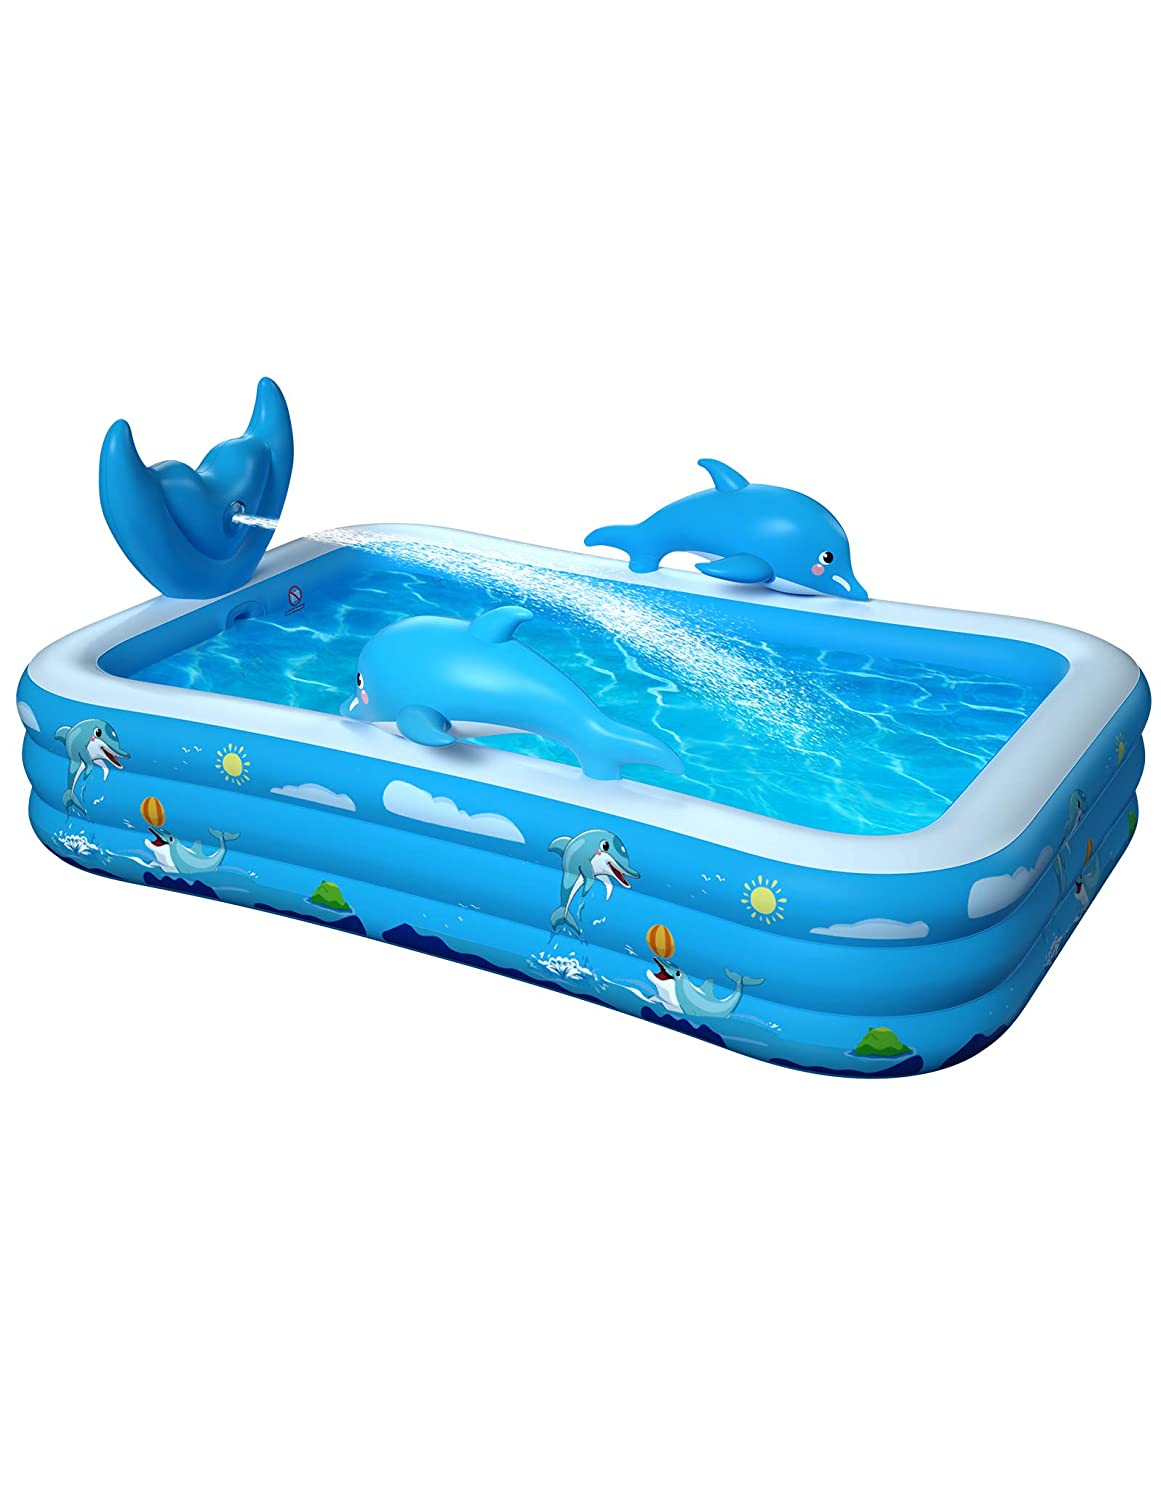 Oxsaml Inflatable Pool for Kids